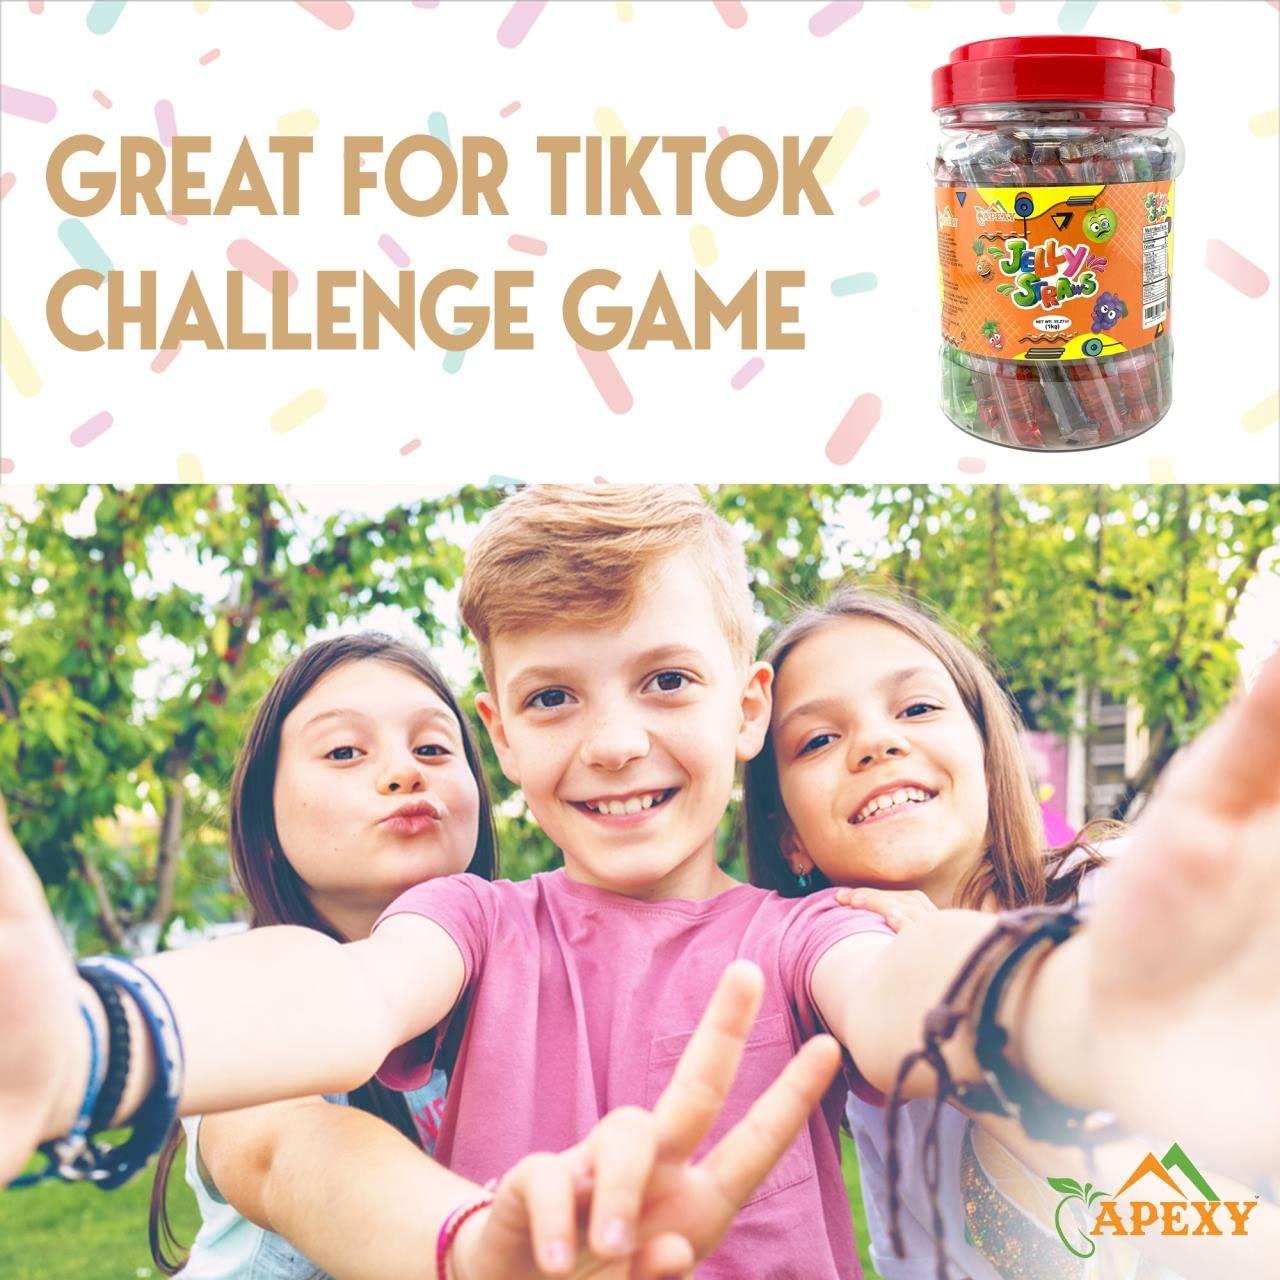  Apexy Jelly Fruit, Tiktok Candy Trend Items, Tik Tok